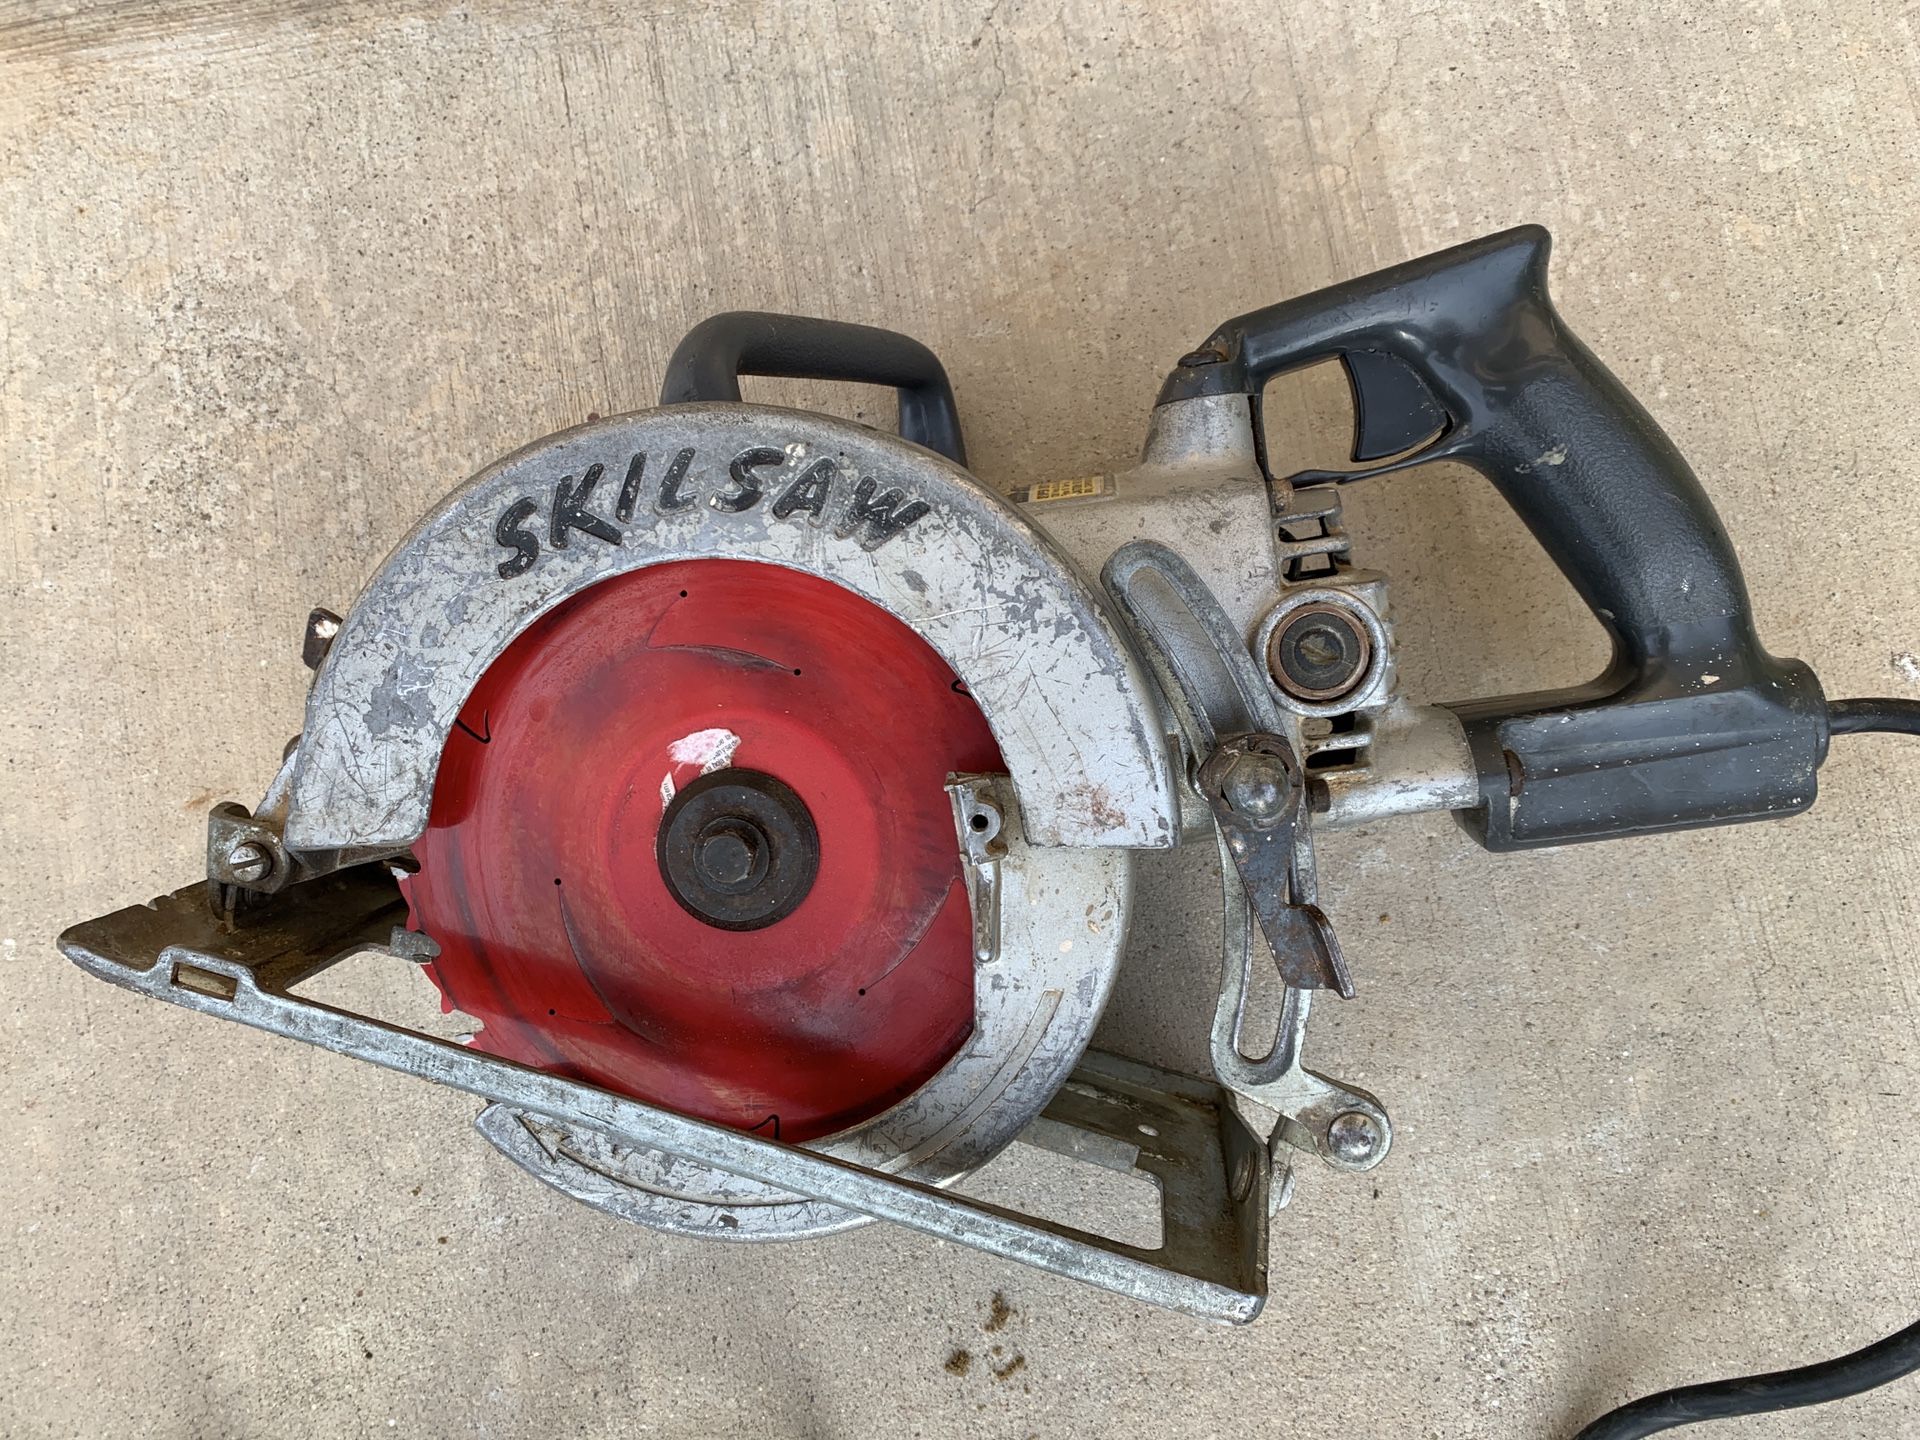 Skil Model 77, 71/4” Worm drive circular saw.